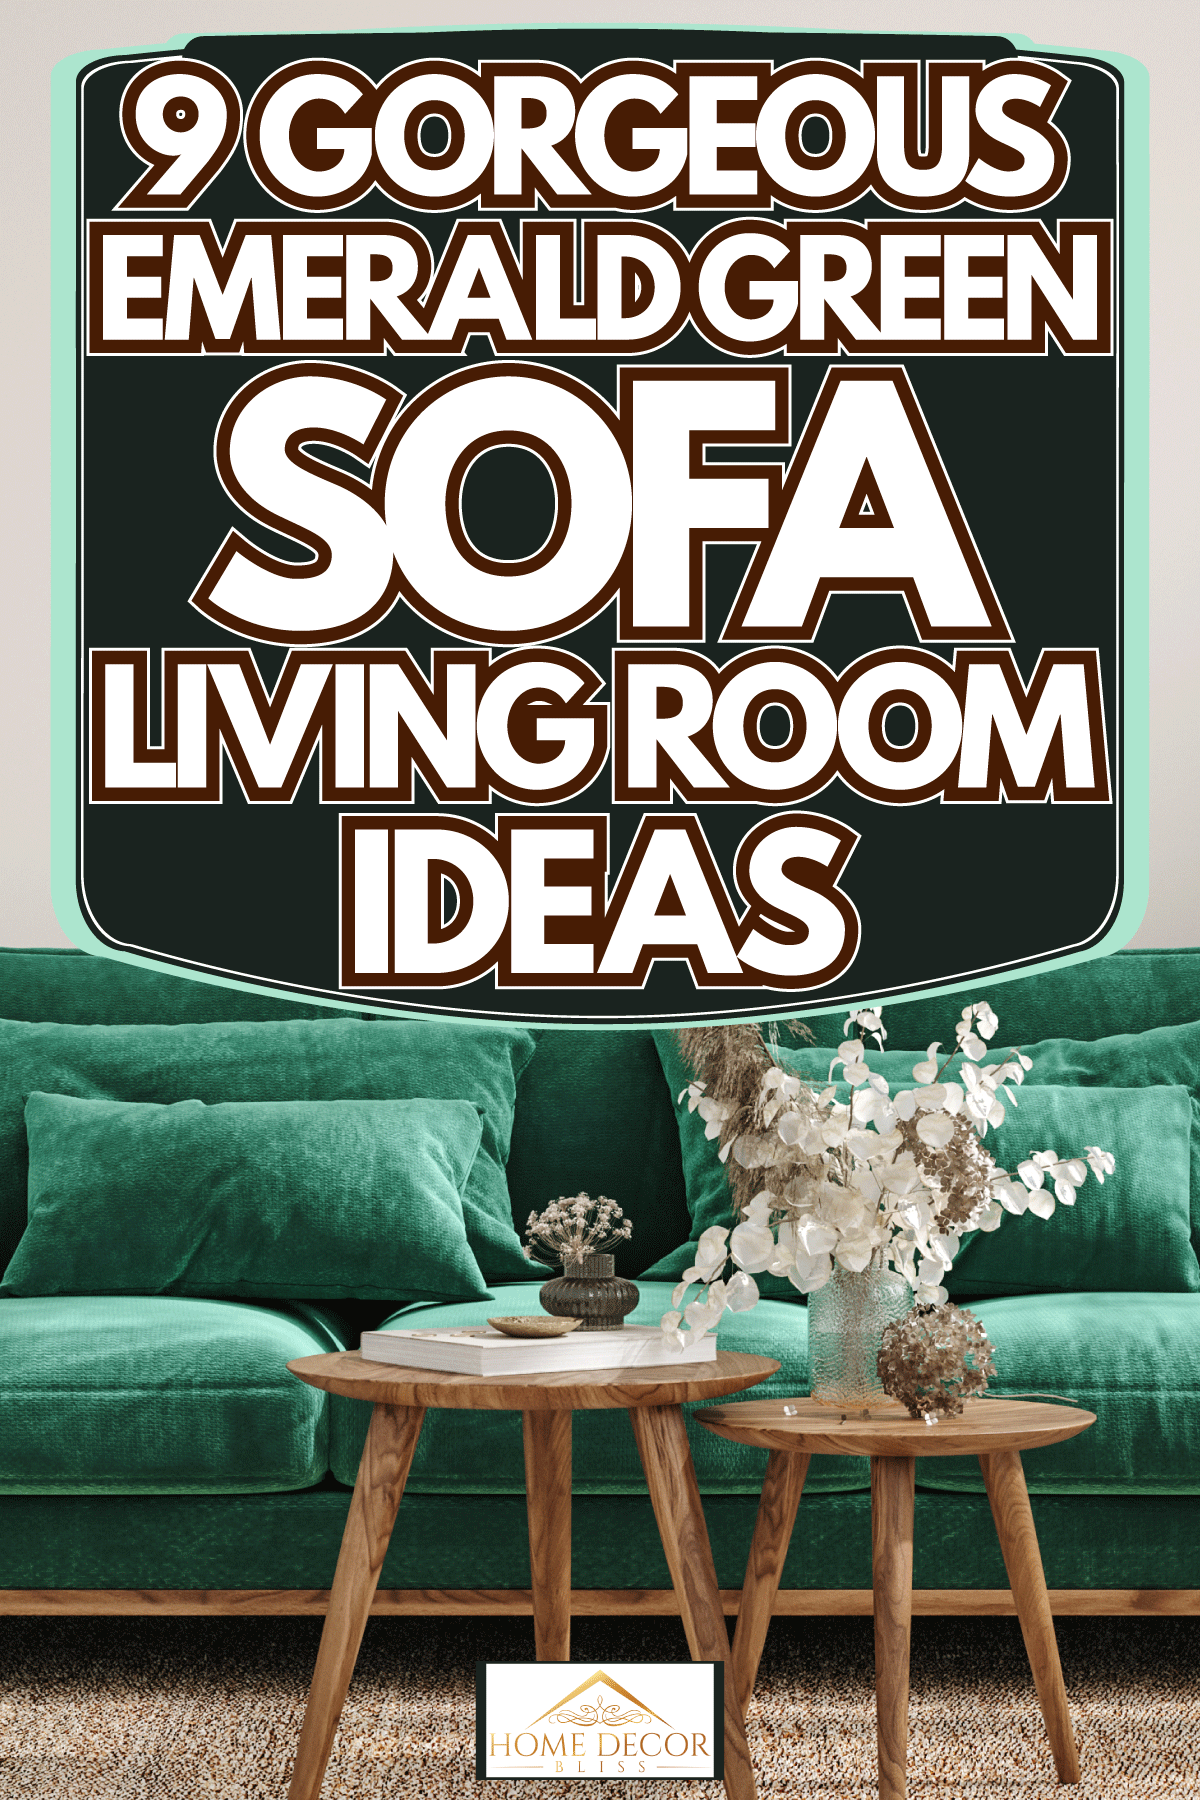 Modern Interior Living room, 9 Gorgeous Emerald Green Sofa Living Room Ideas